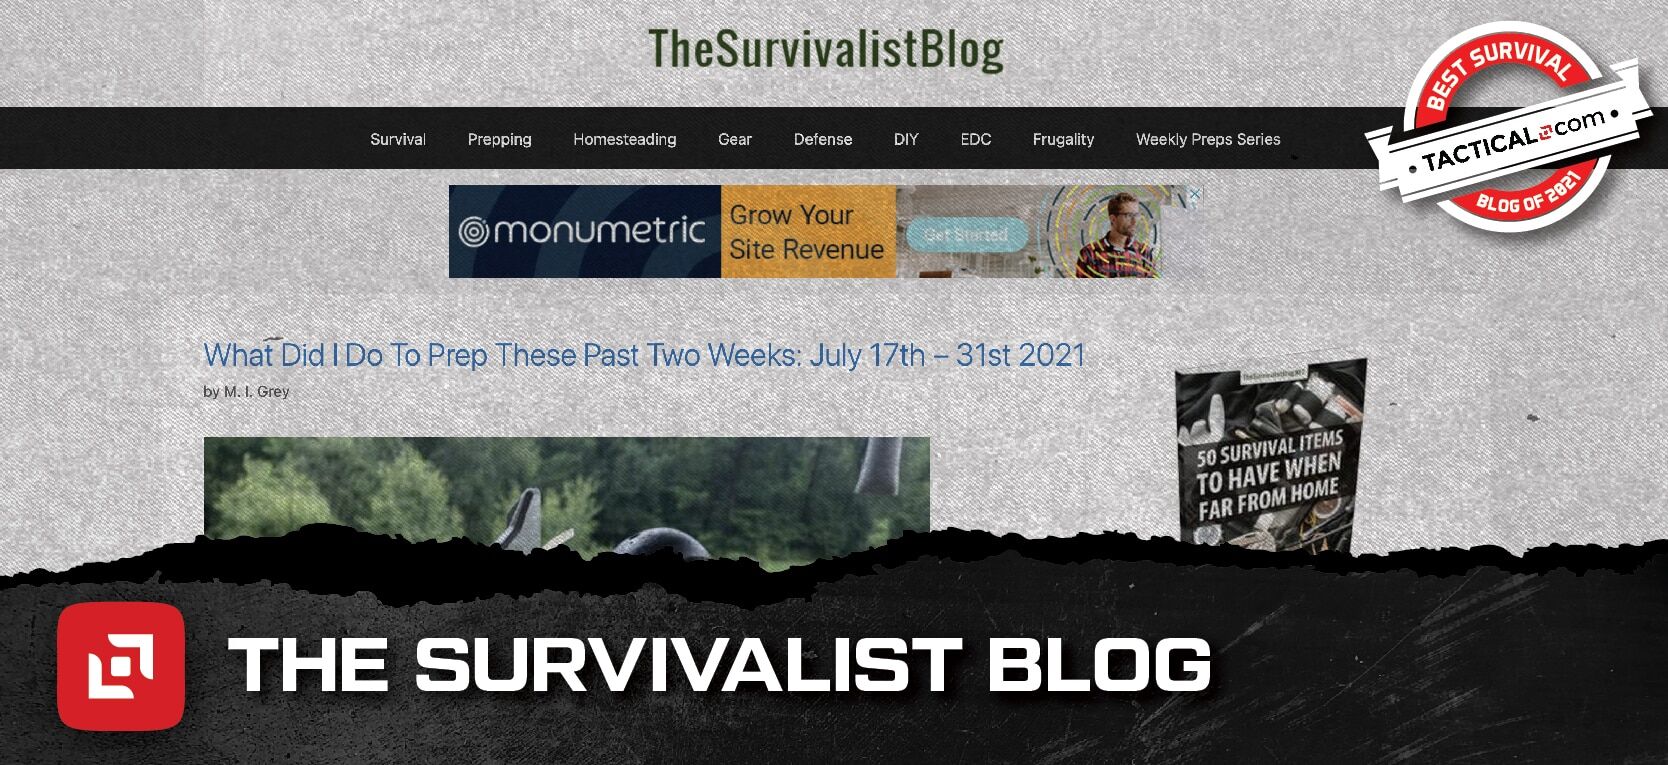 The Survivalist Blog homepage